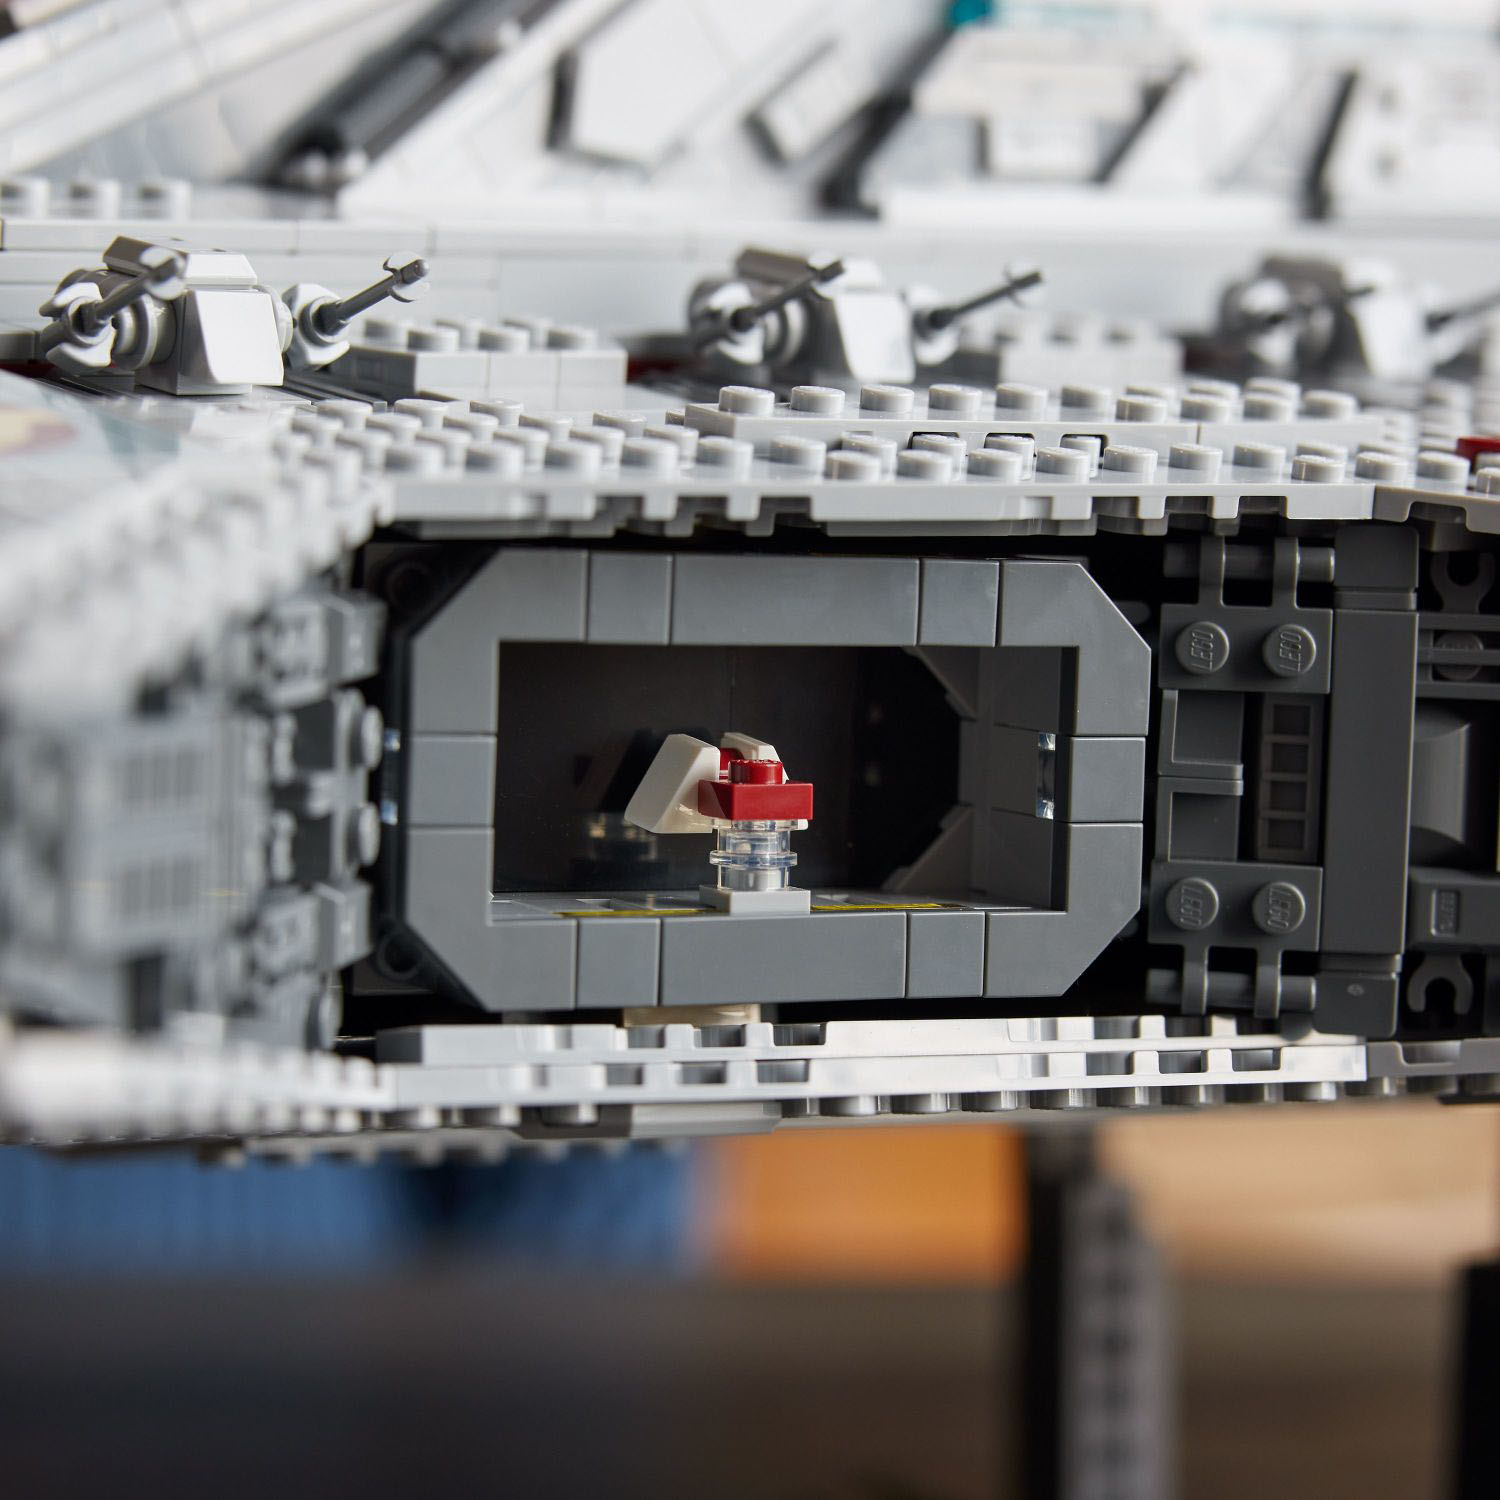 Lego Star Wars Venator-class Republic Attack Cruiser Building Set